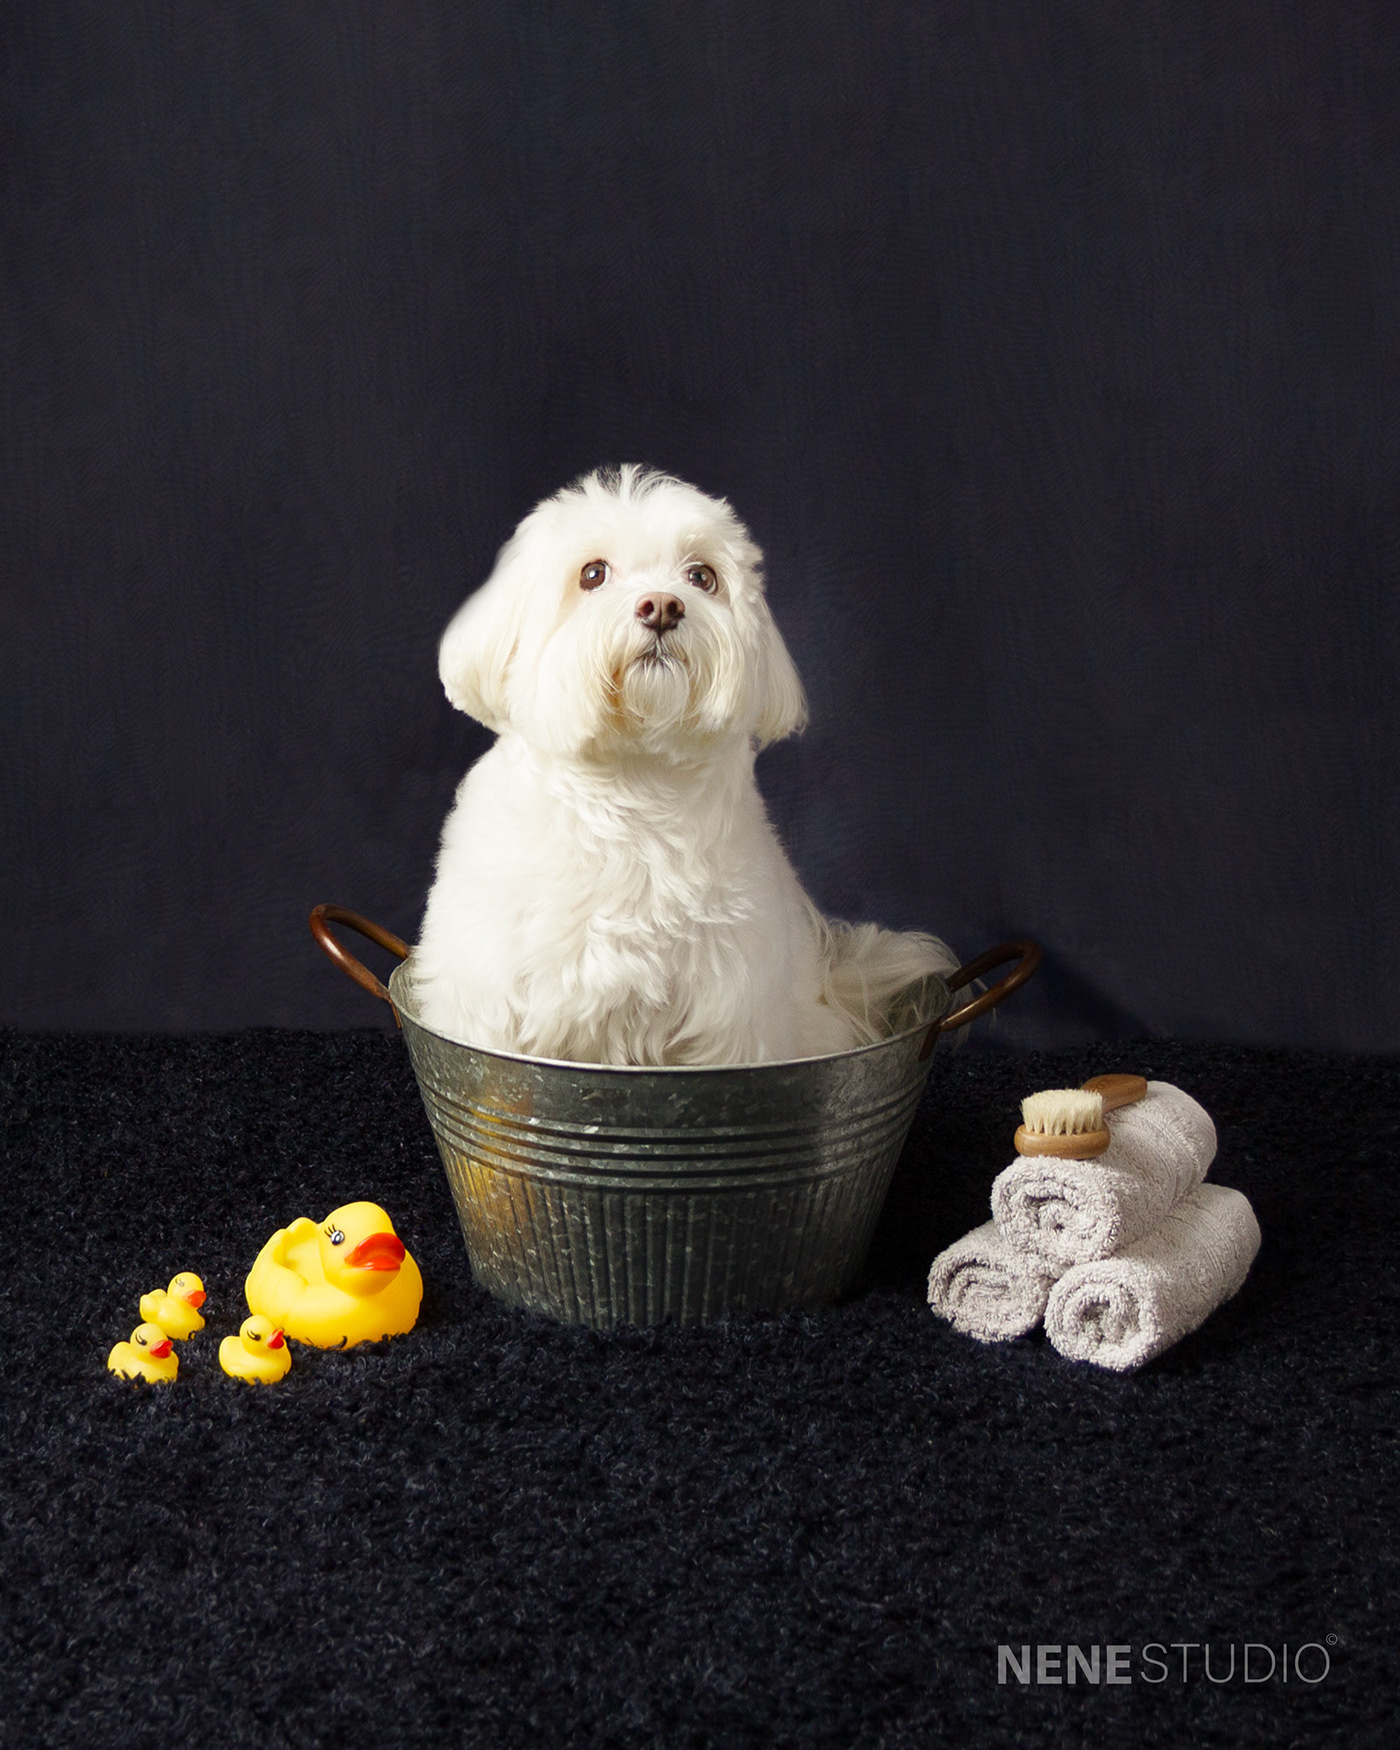 NENESTUDIO NENEPHOTO photoshoting Love pets dogs family photopets